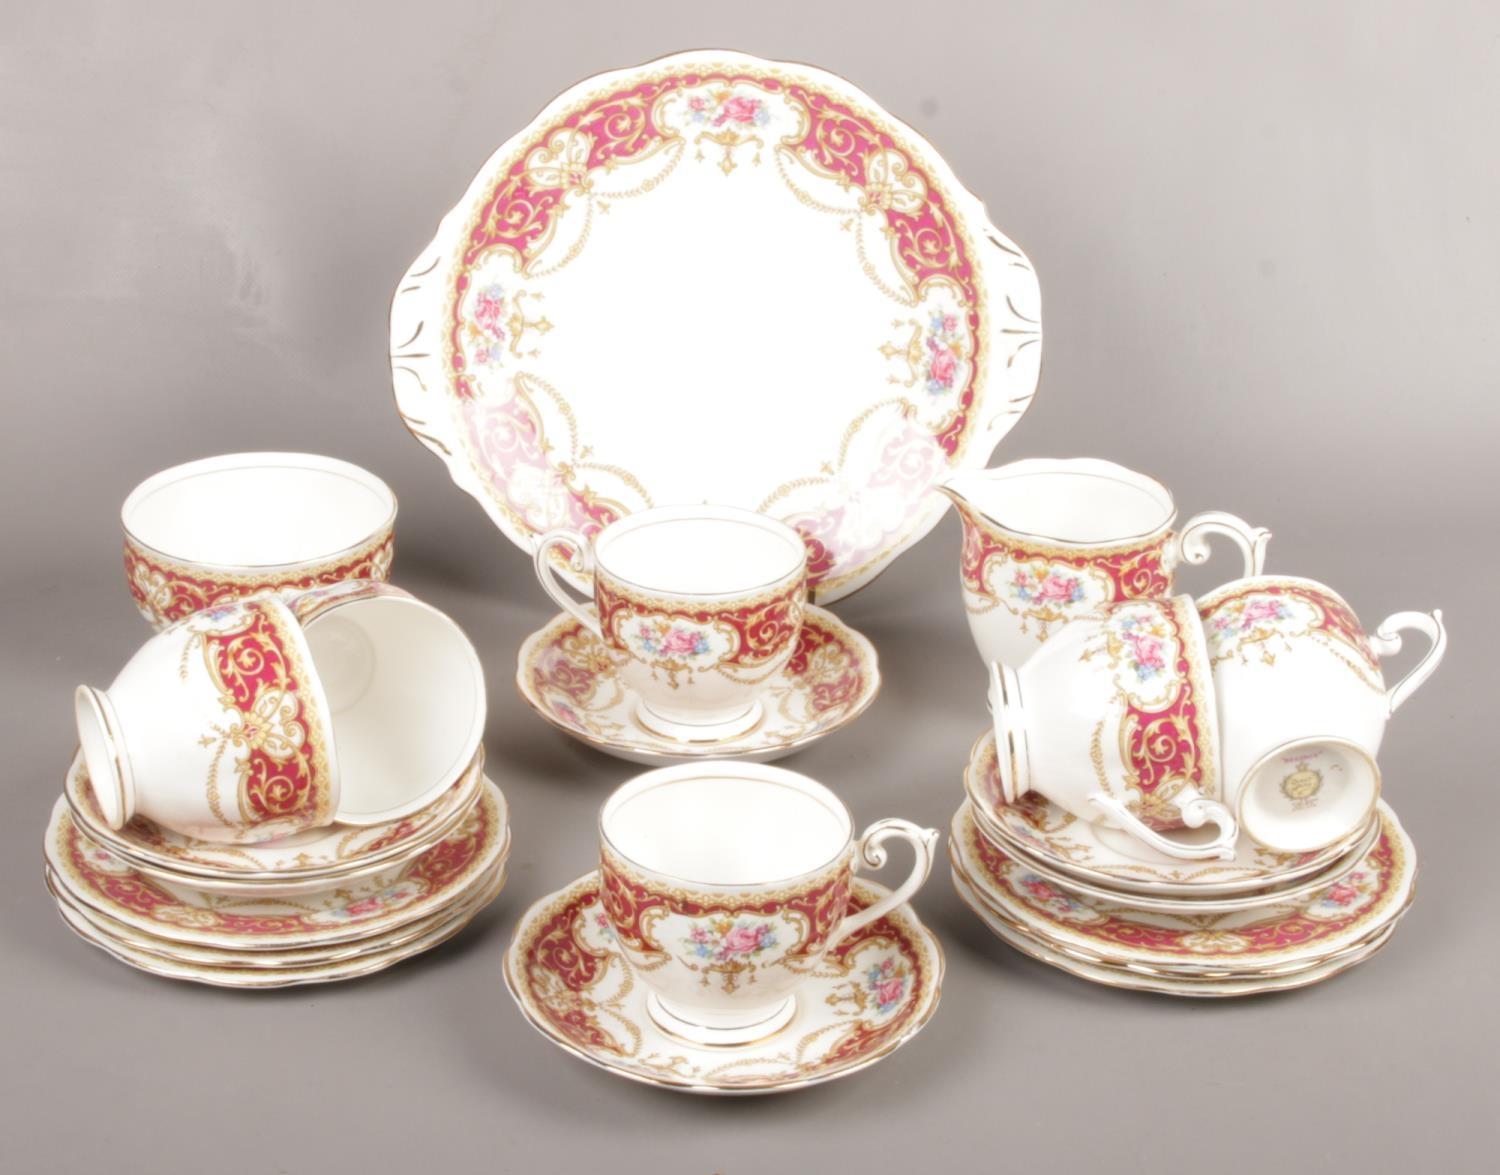 A collection of Queen Anne Regency pattern tea set, cups, saucers, sugar bowl, milk jug etc